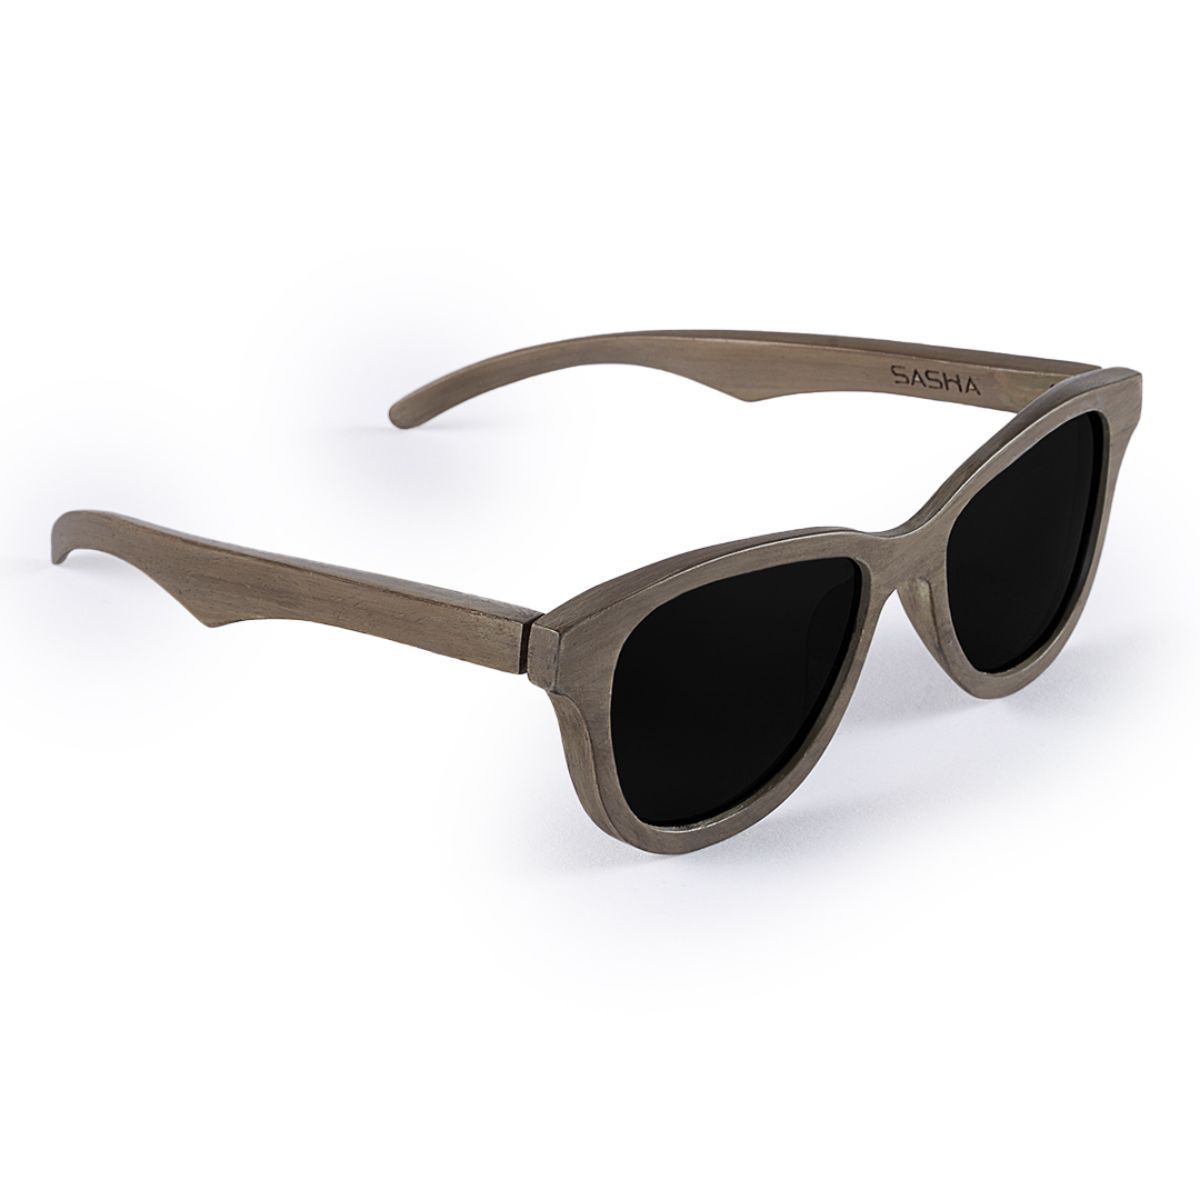 Ralph by Ralph Lauren Shiny Black Sunglasses | Glasses.com® | Free Shipping